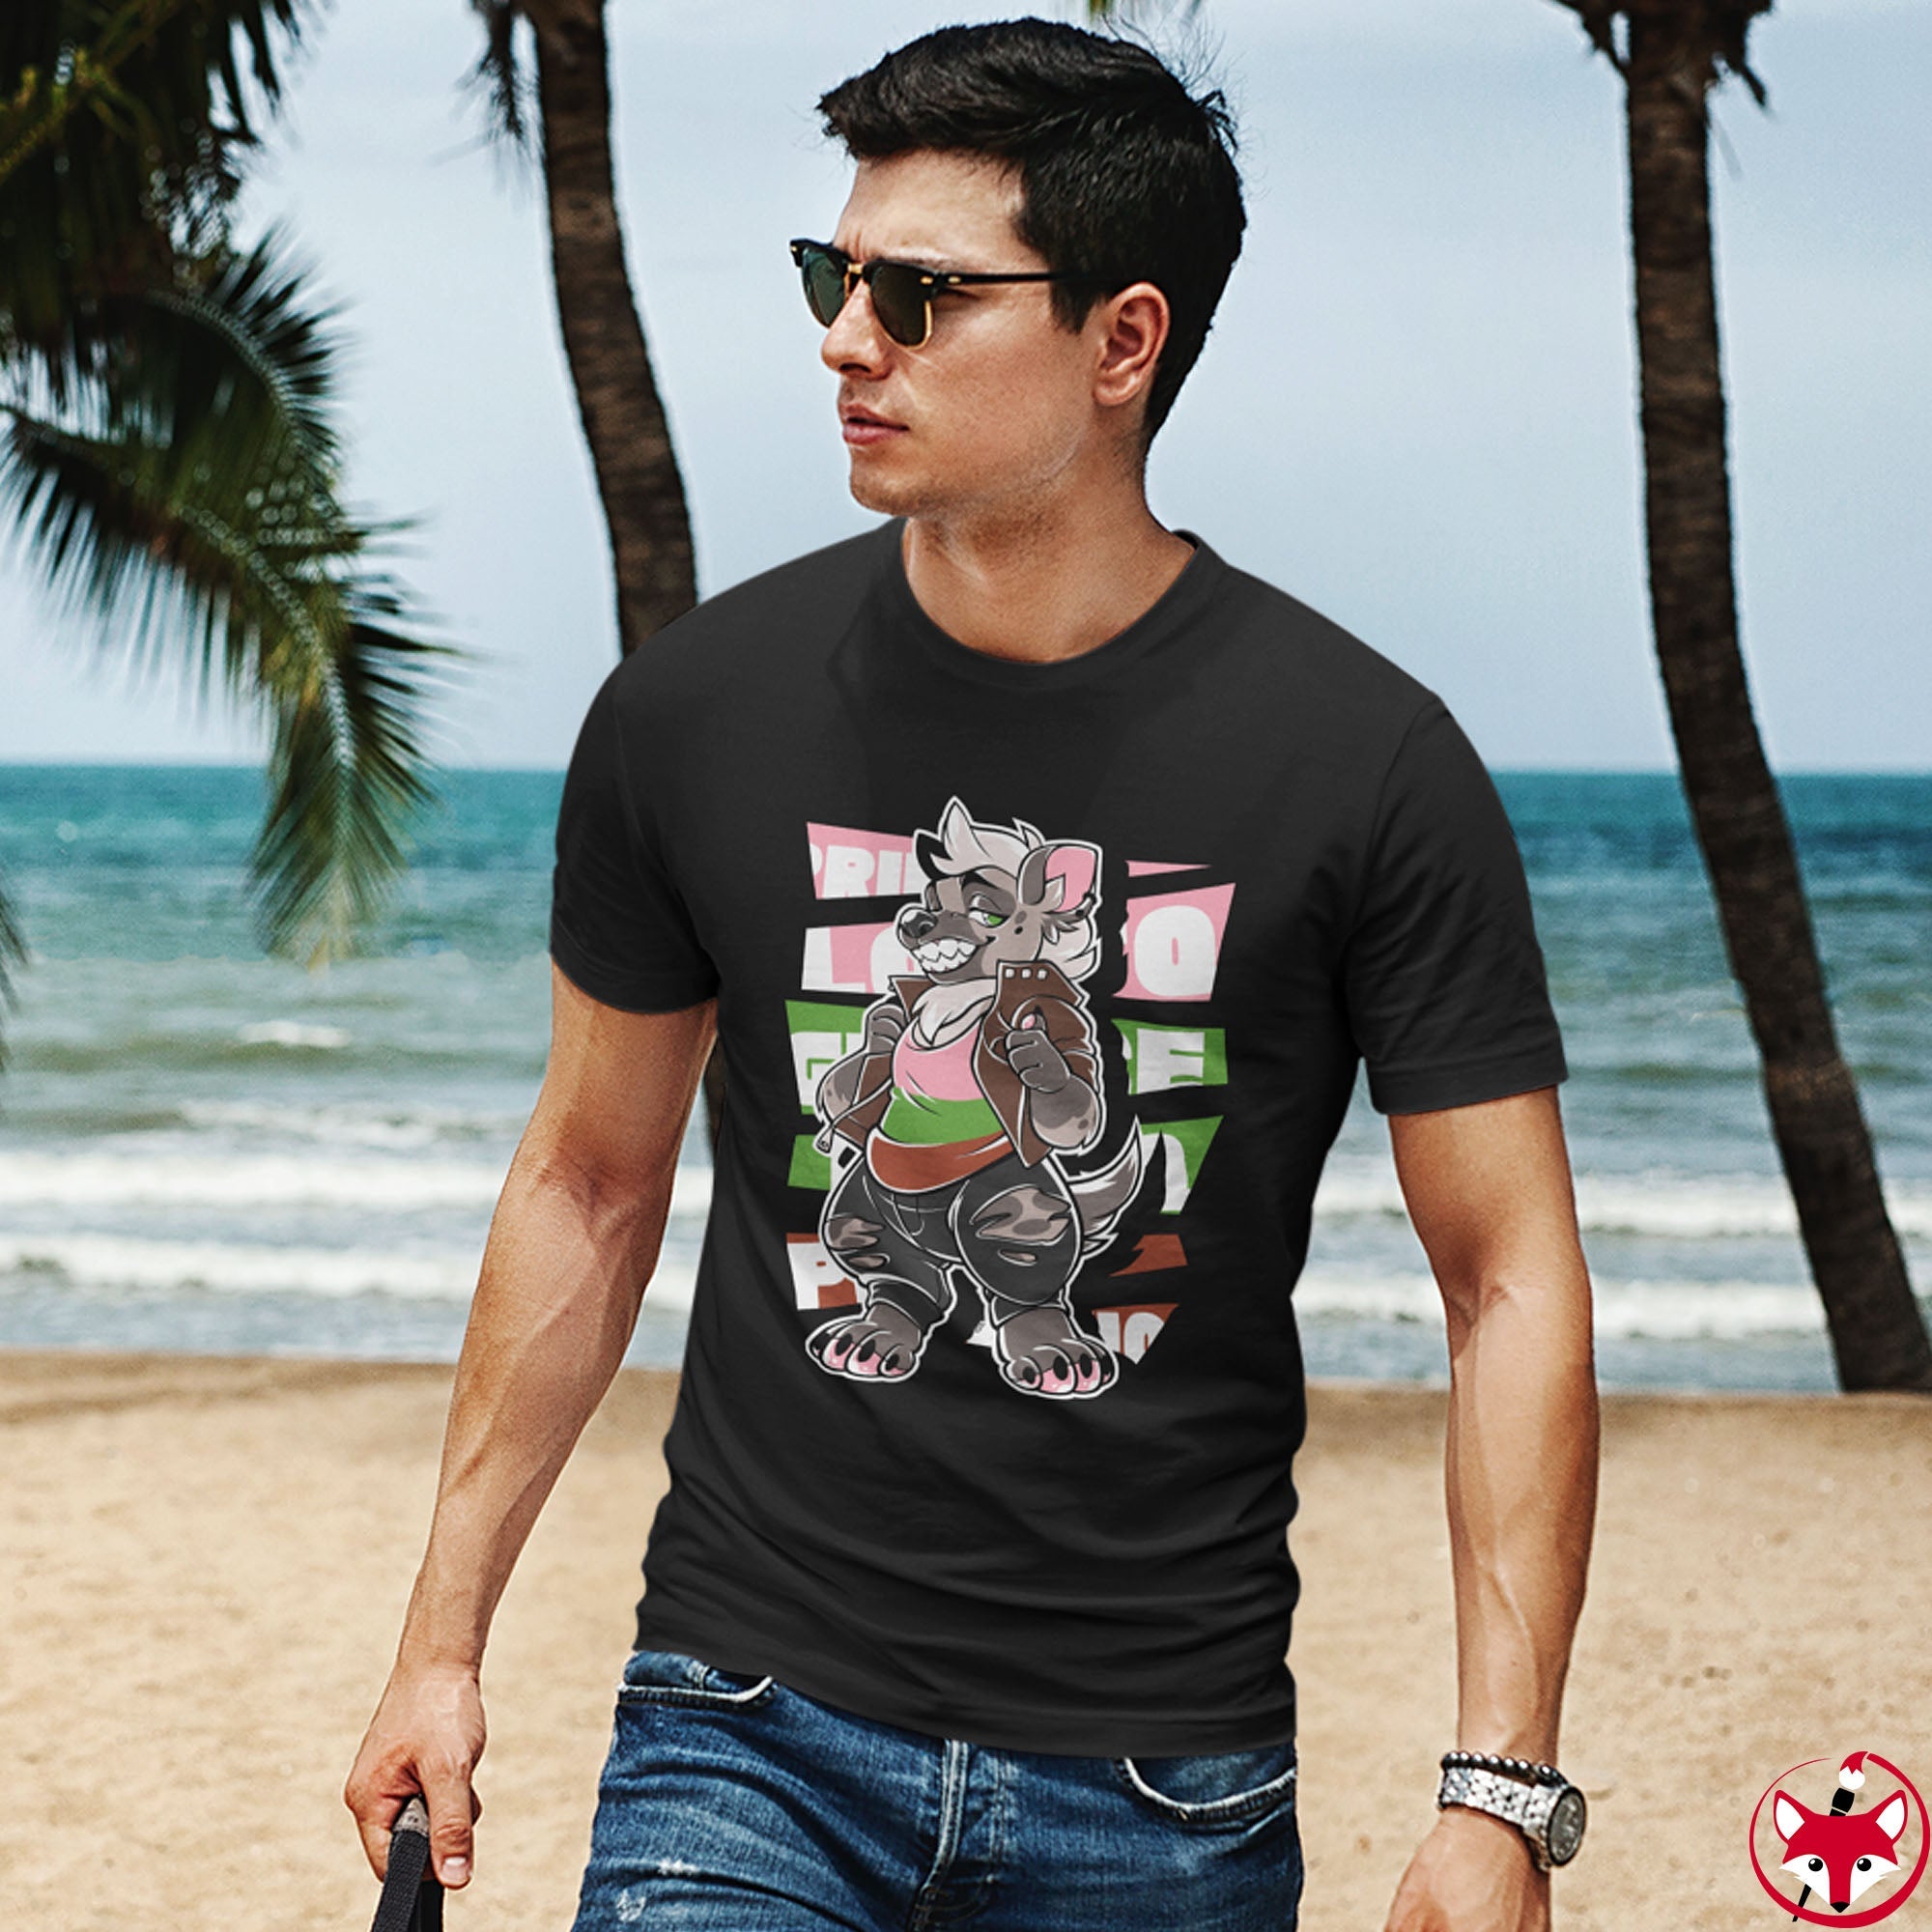 Gynosexual Pride Colt Hyena - T-Shirt T-Shirt Artworktee 